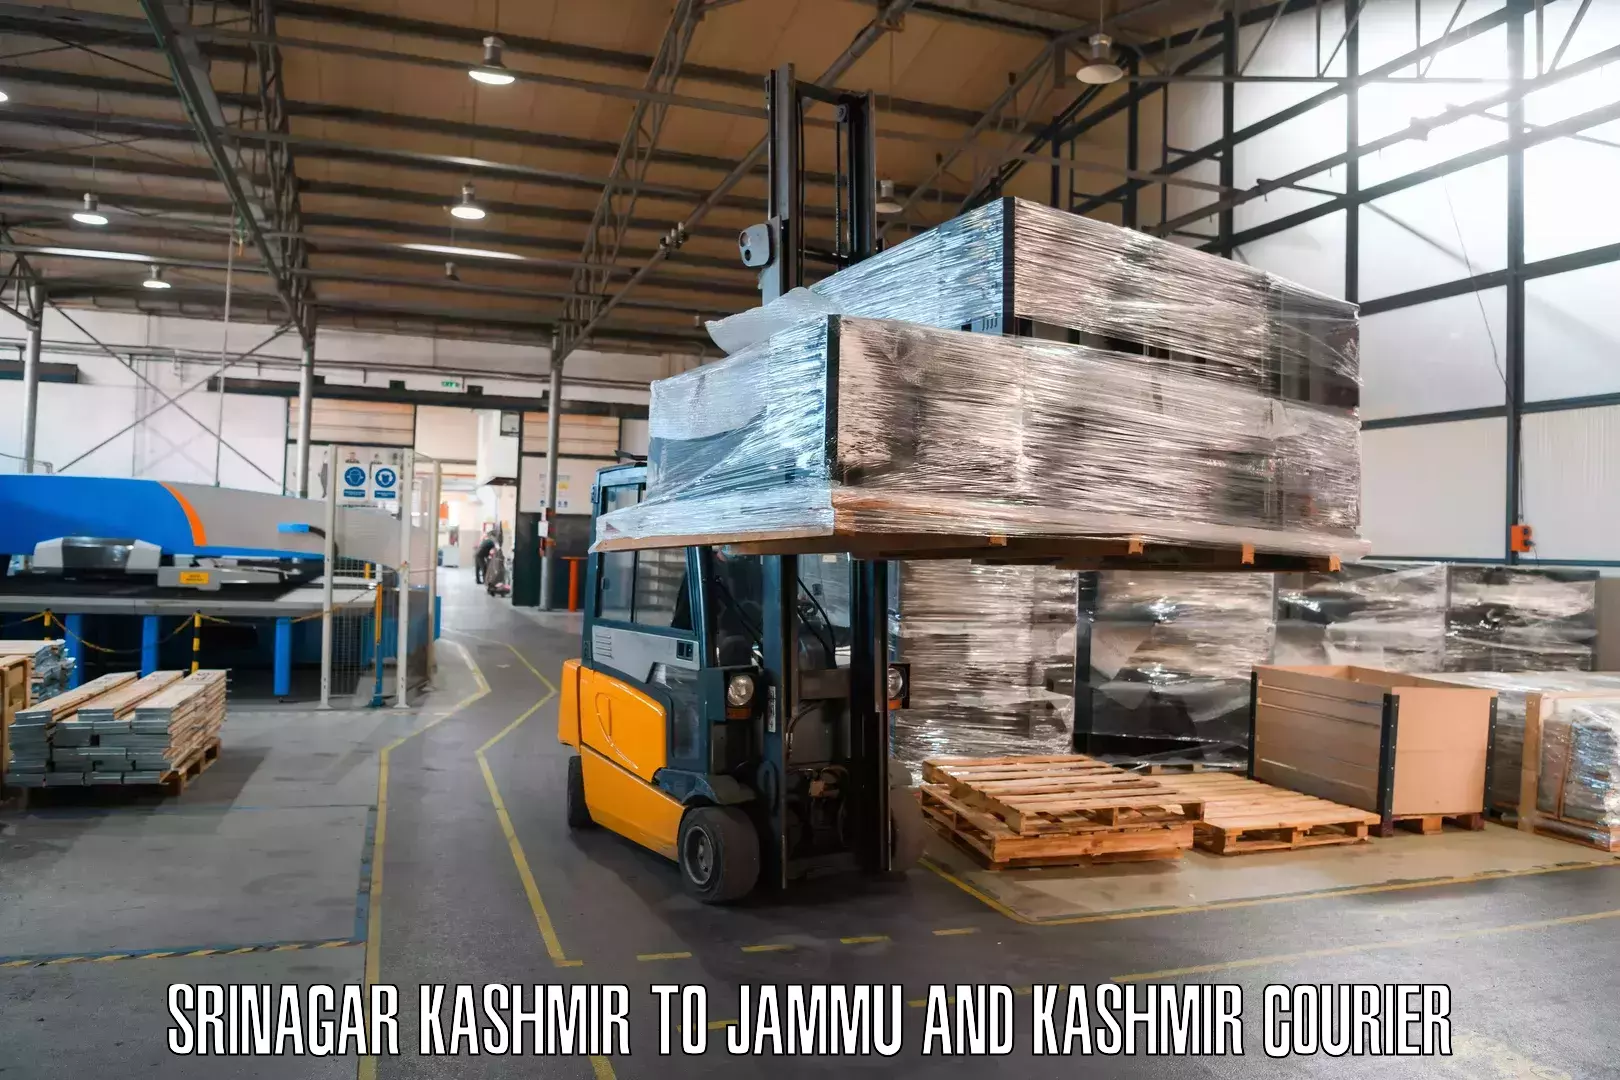 Professional courier handling Srinagar Kashmir to Jammu